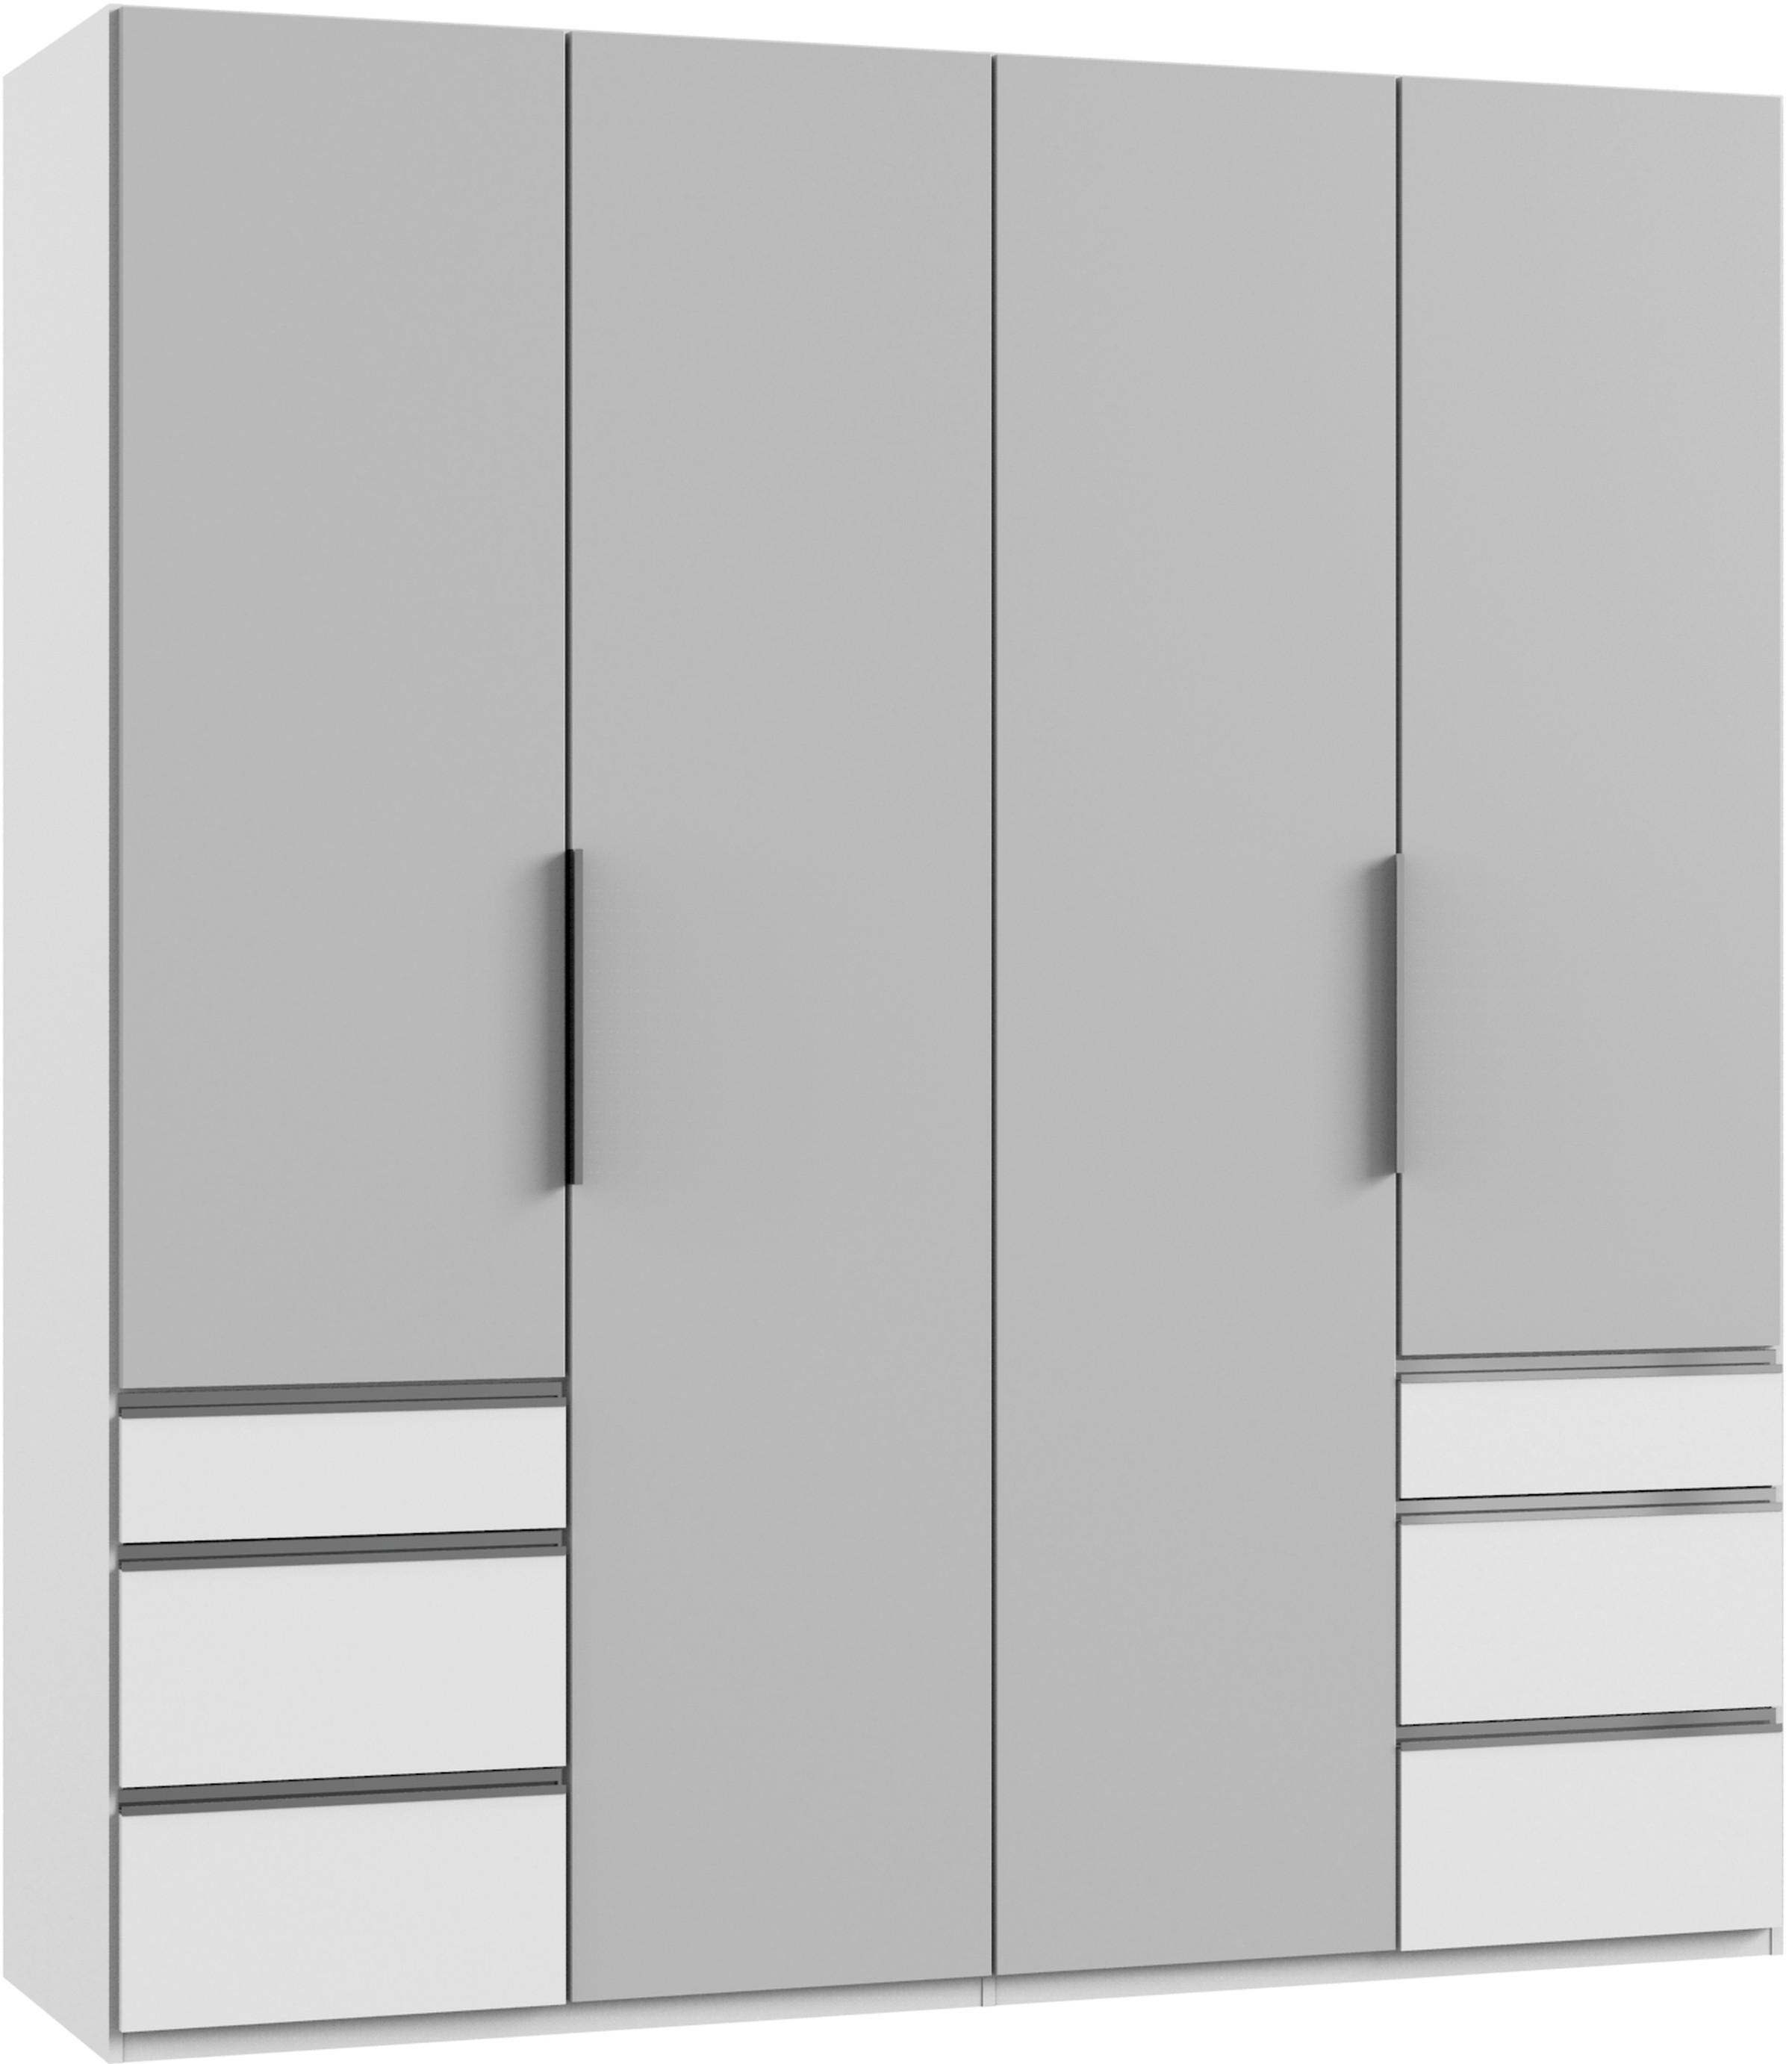 DREHTÜRENSCHRANK 4-türig Weiß, Hellgrau  - Chromfarben/Hellgrau, MODERN, Holzwerkstoff/Metall (200/216/58cm) - MID.YOU